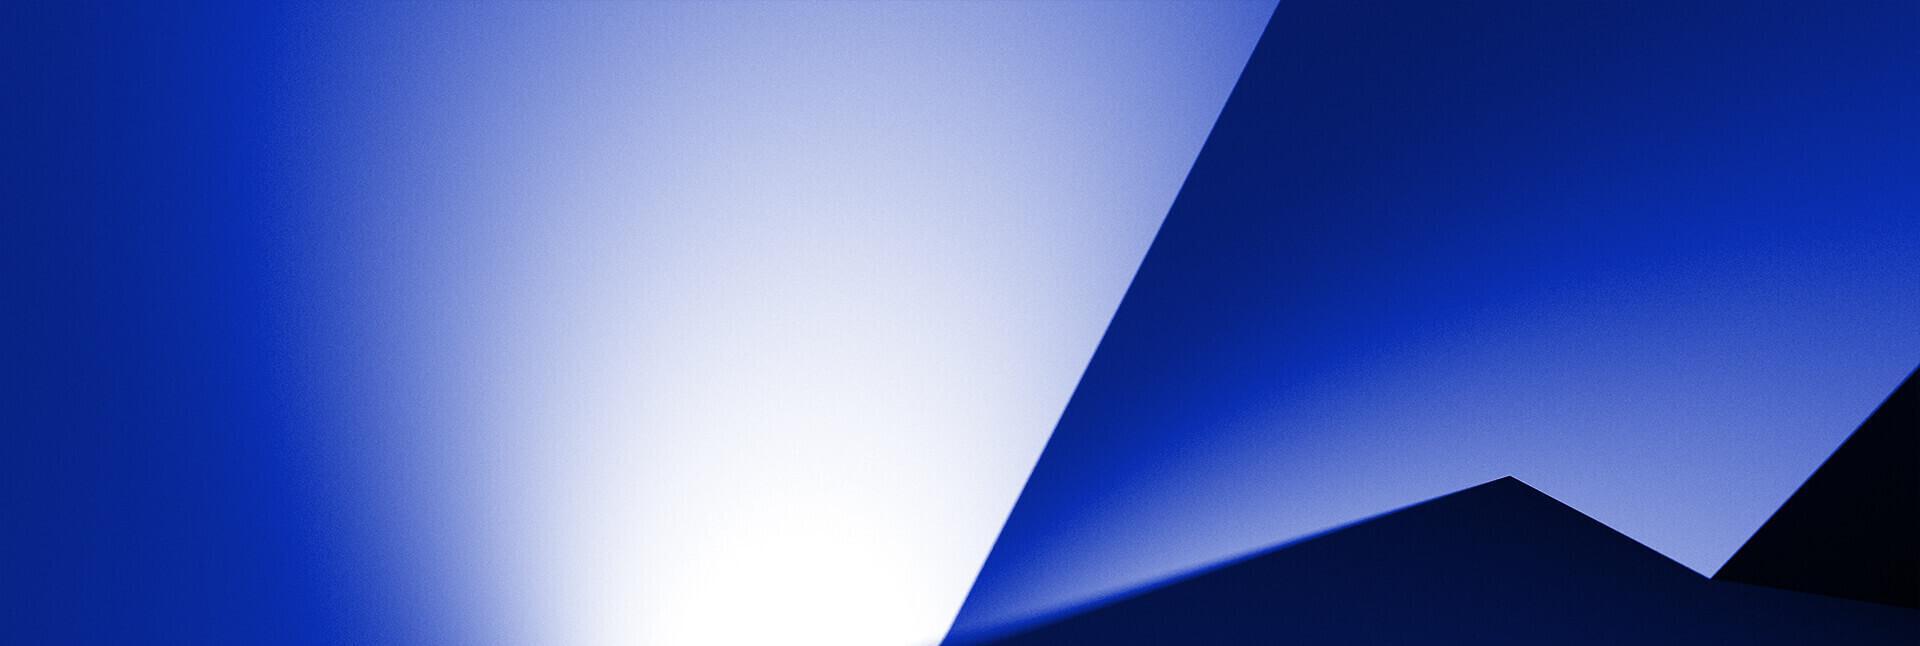 rra-background-blue-12-2021.jpg